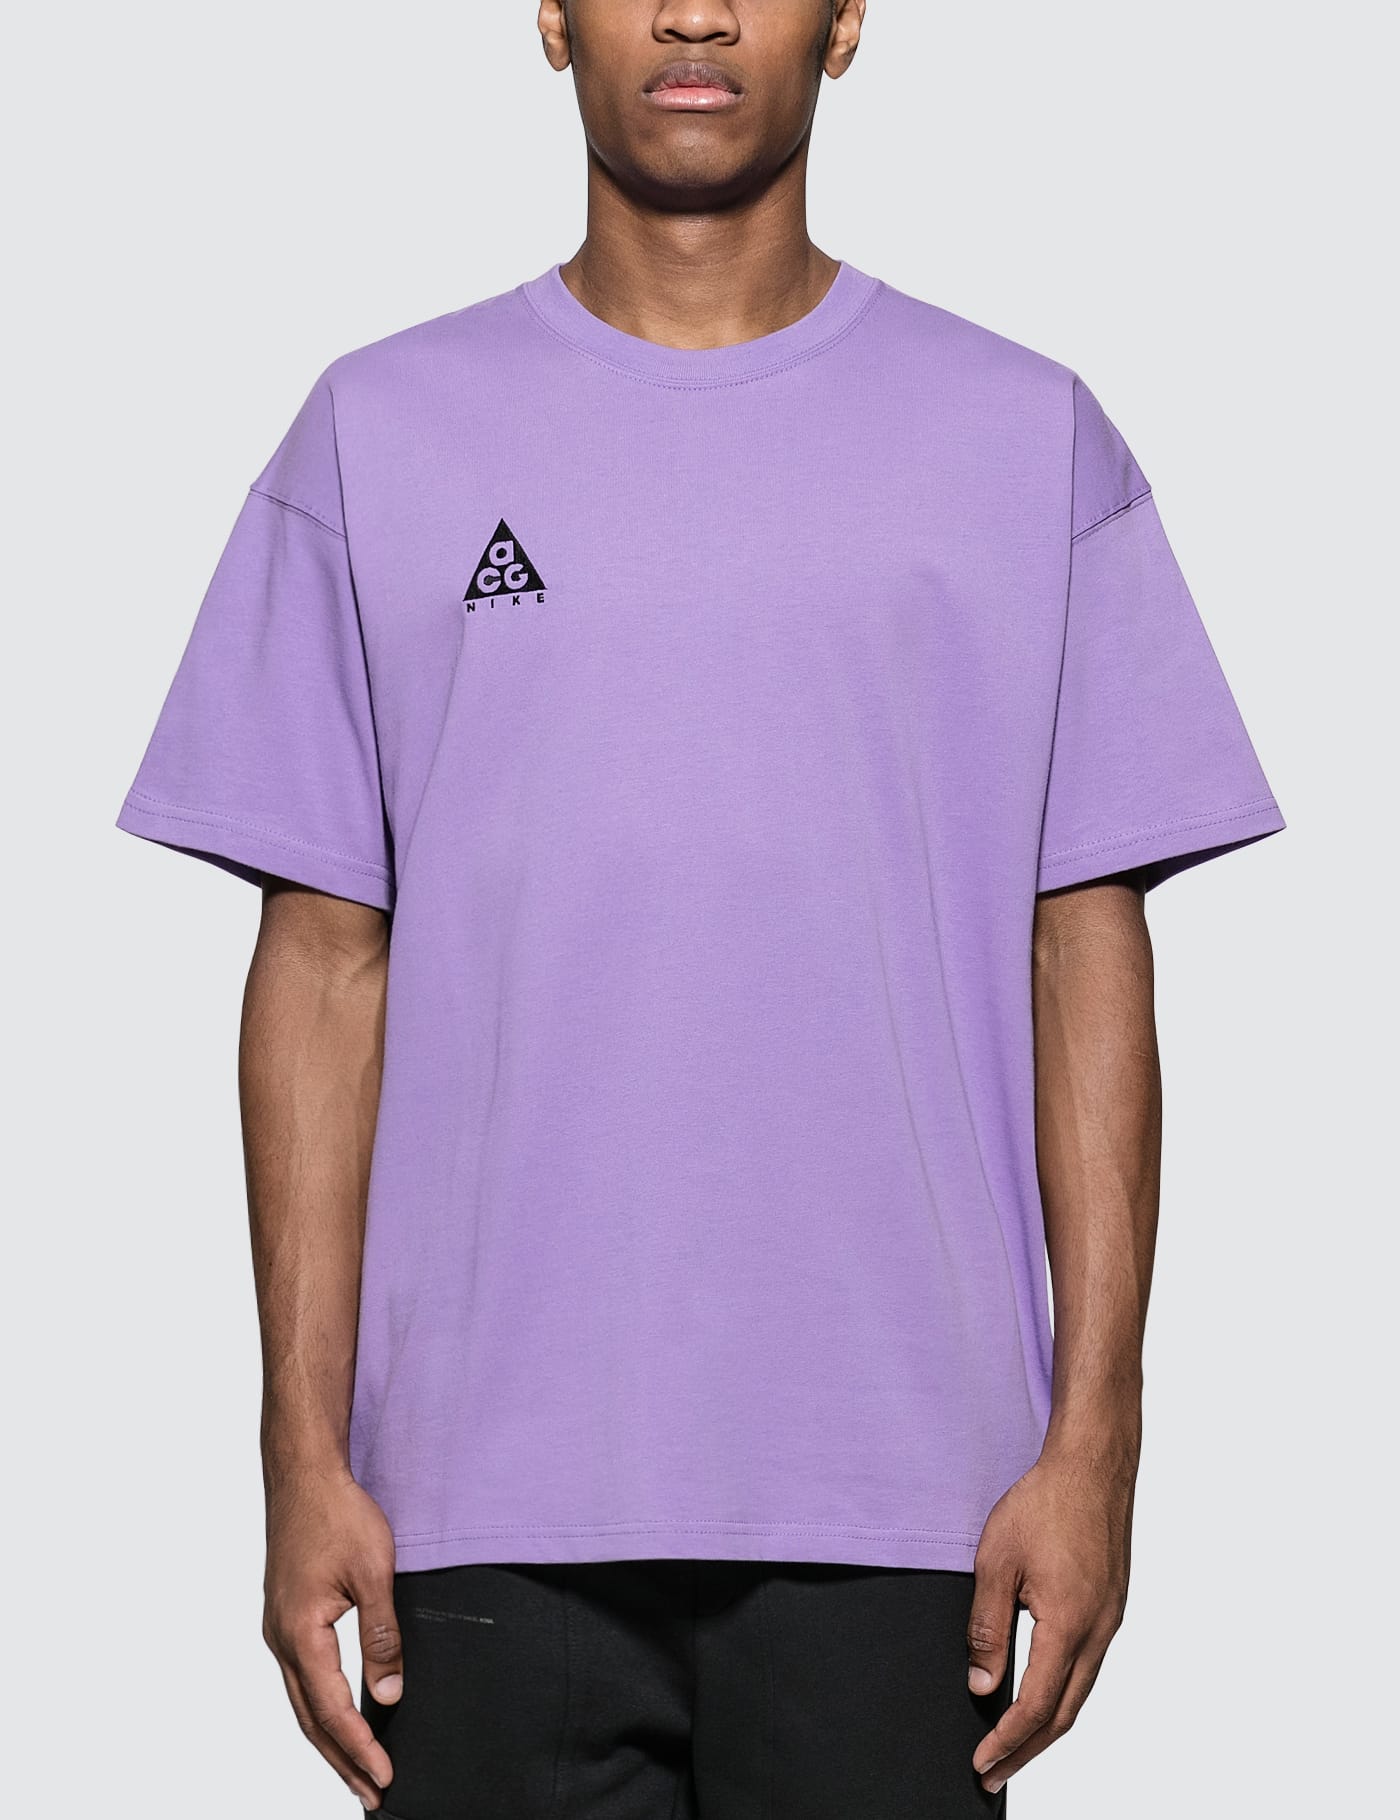 nike acg purple shirt